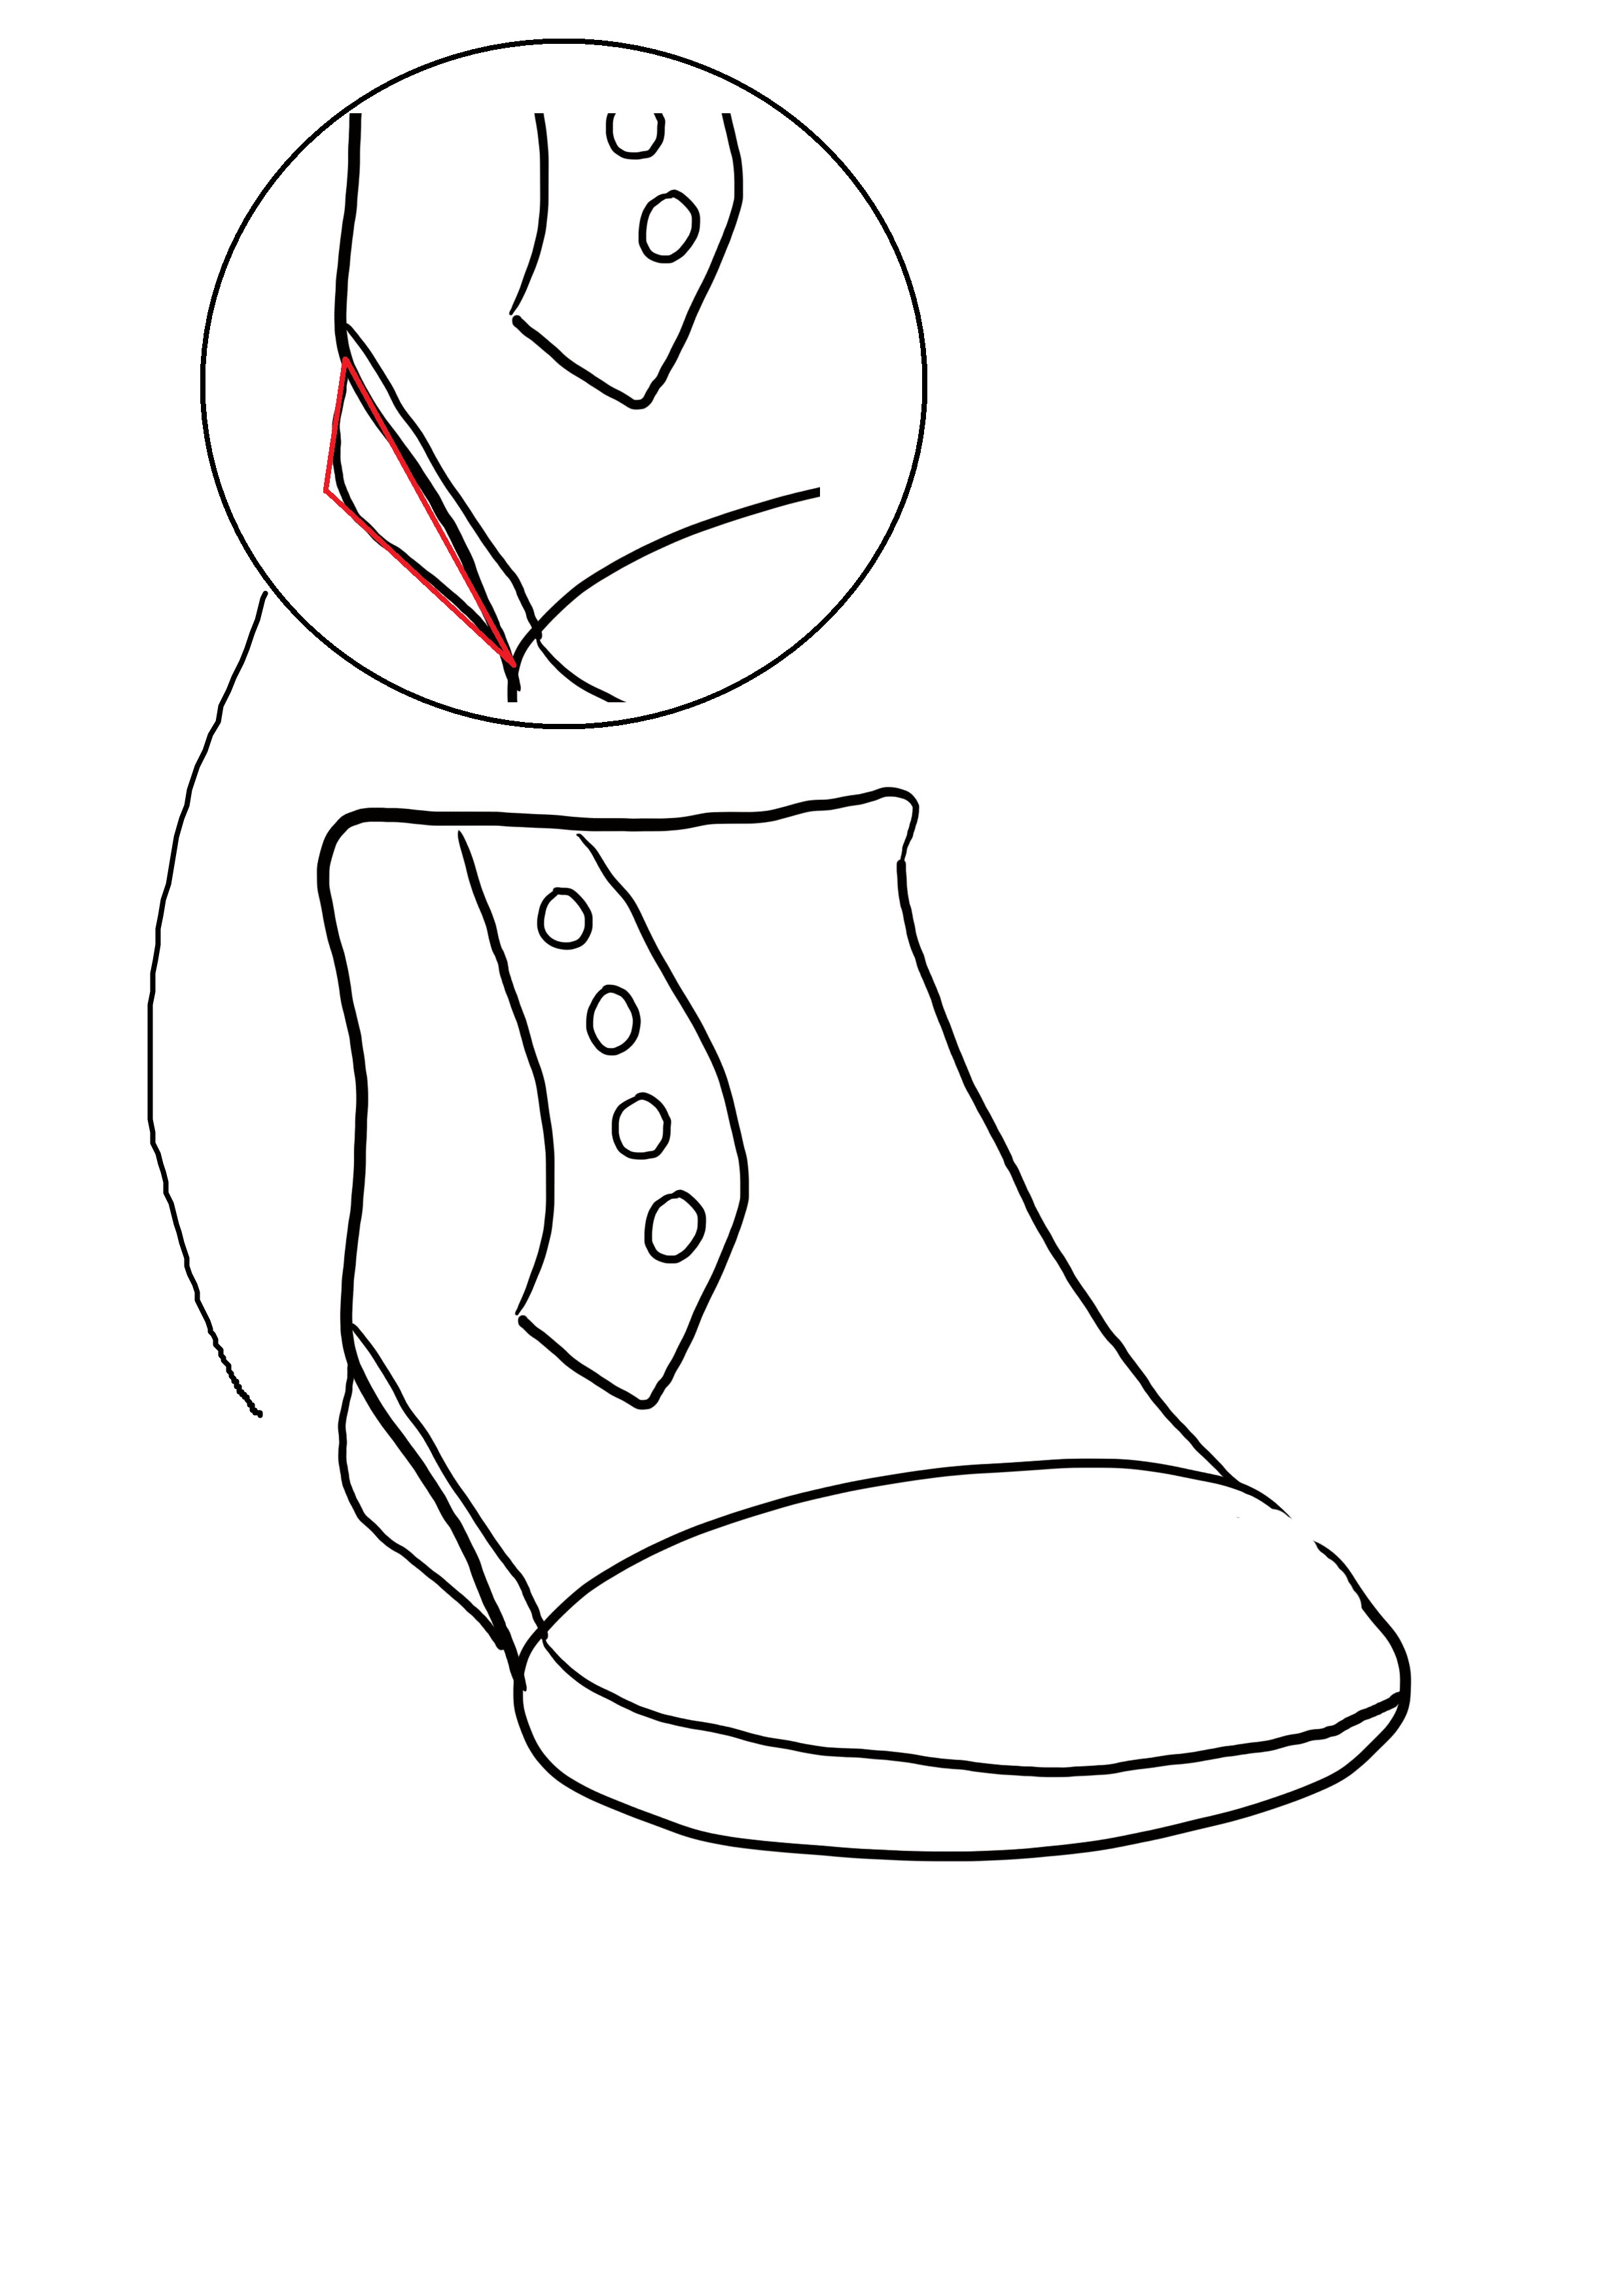 dessin difficile : la semelle de la chaussure